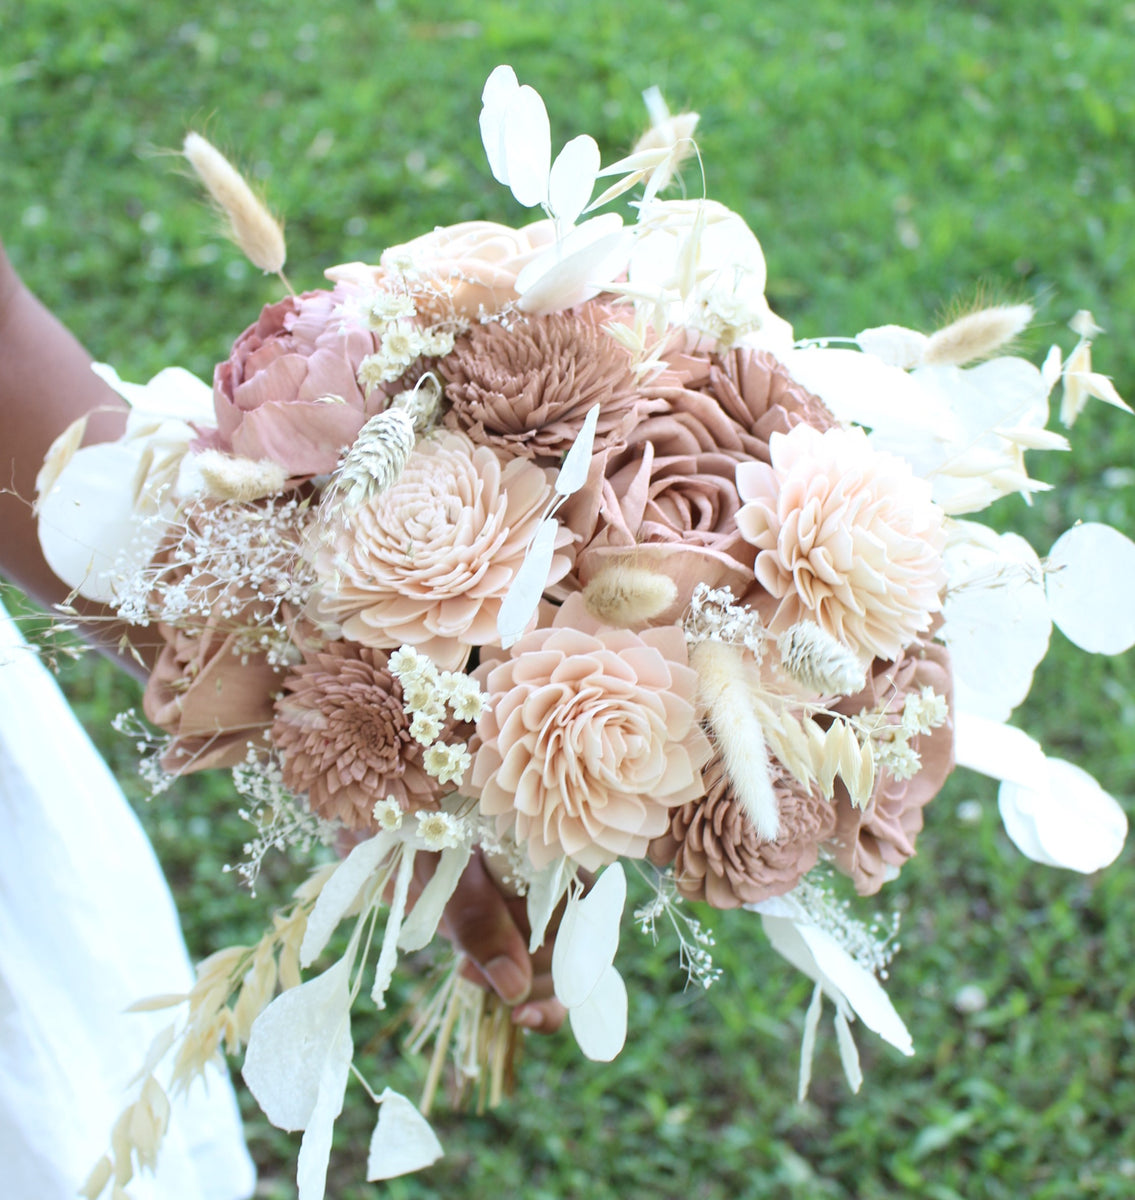 Wedding Artificial Blue Pink Small Flower Bouquet Supplies for